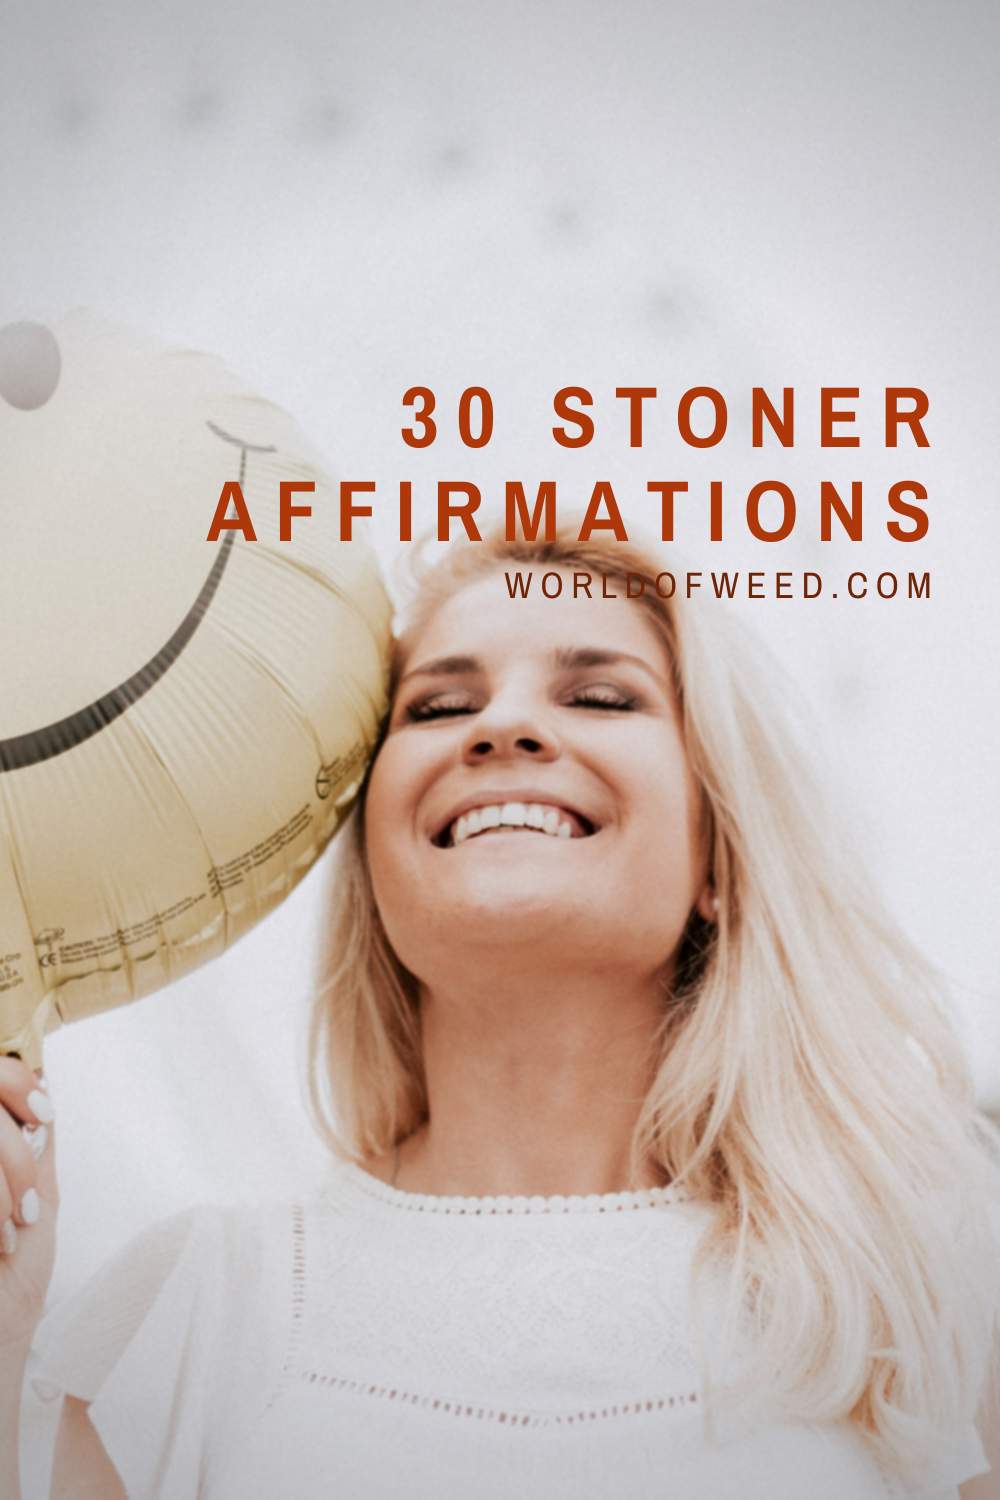 30 Stoner Affirmations for Positivity